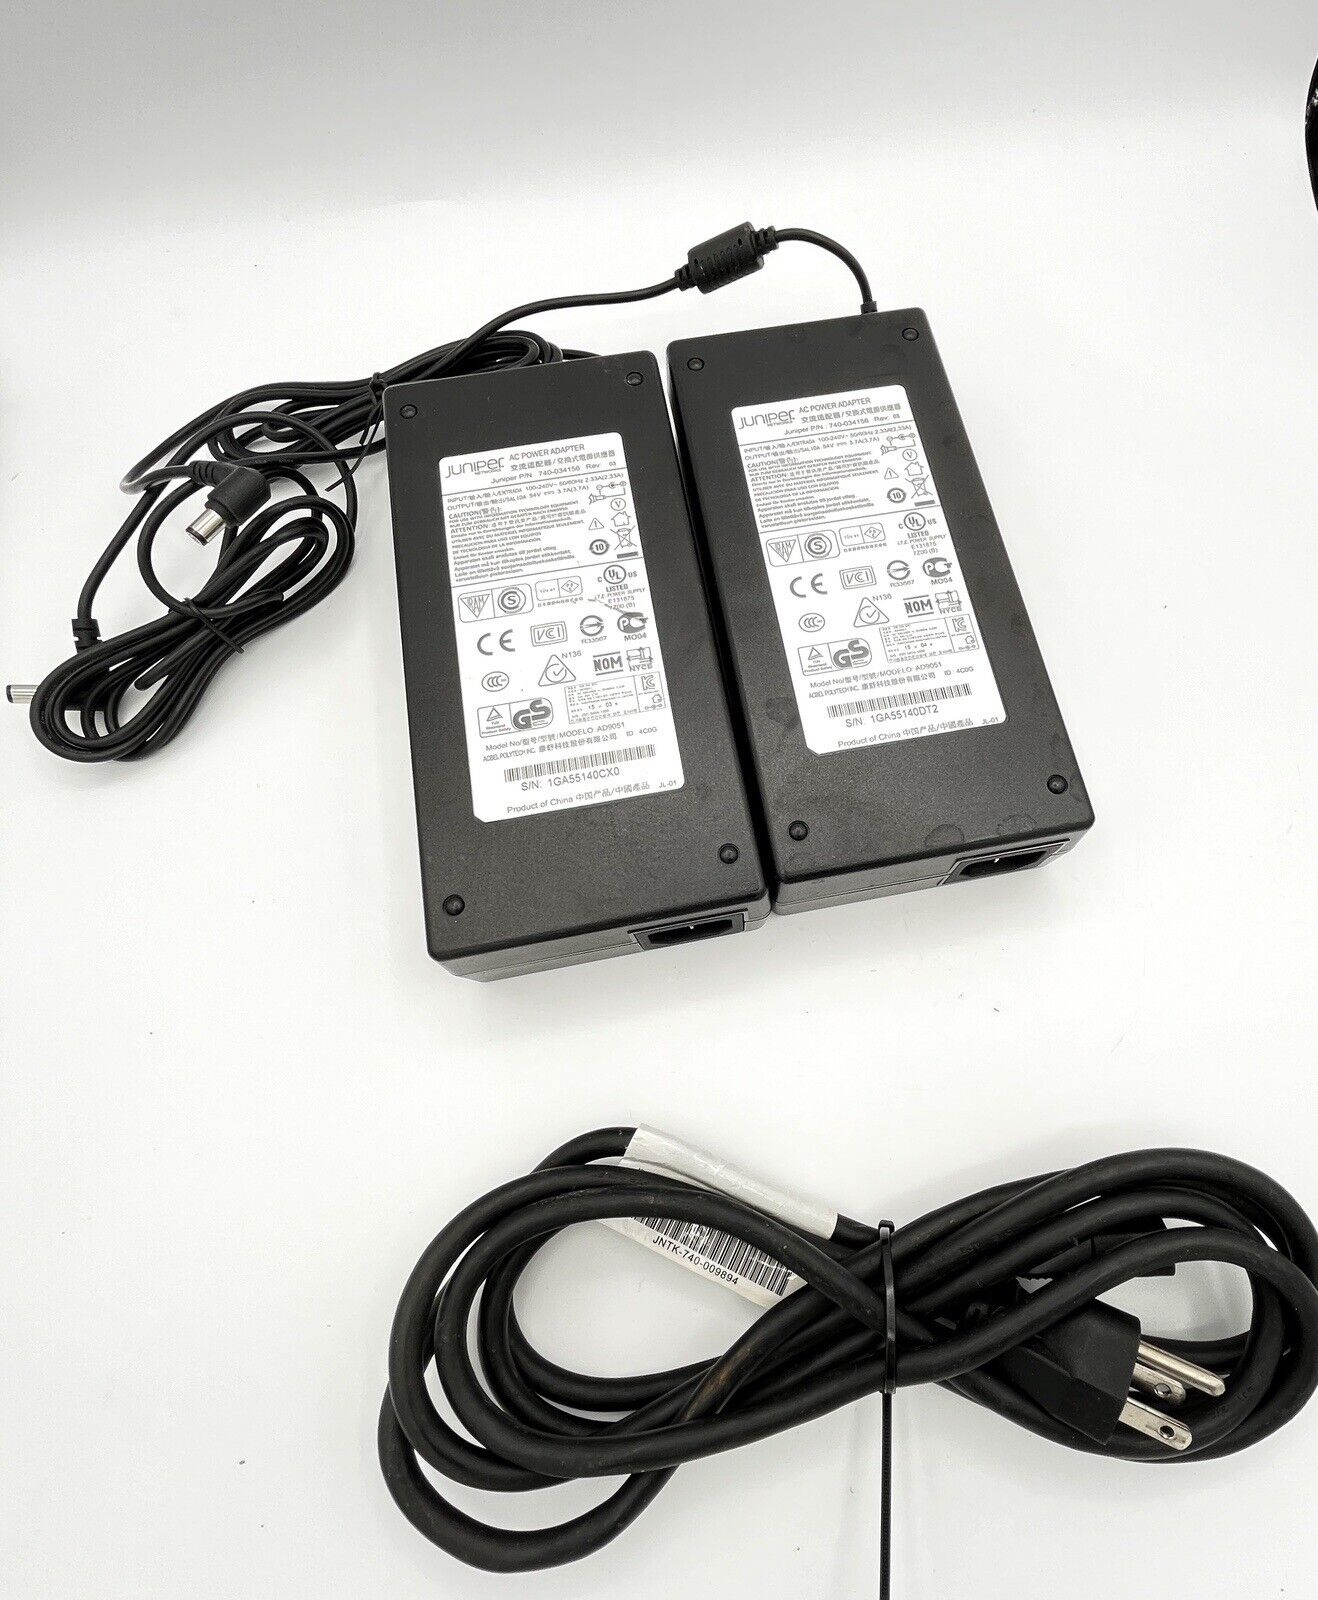 2 Genuine Juniper Network AC Power Supply Adapter 740-034156 AD9051 54V 3.7A